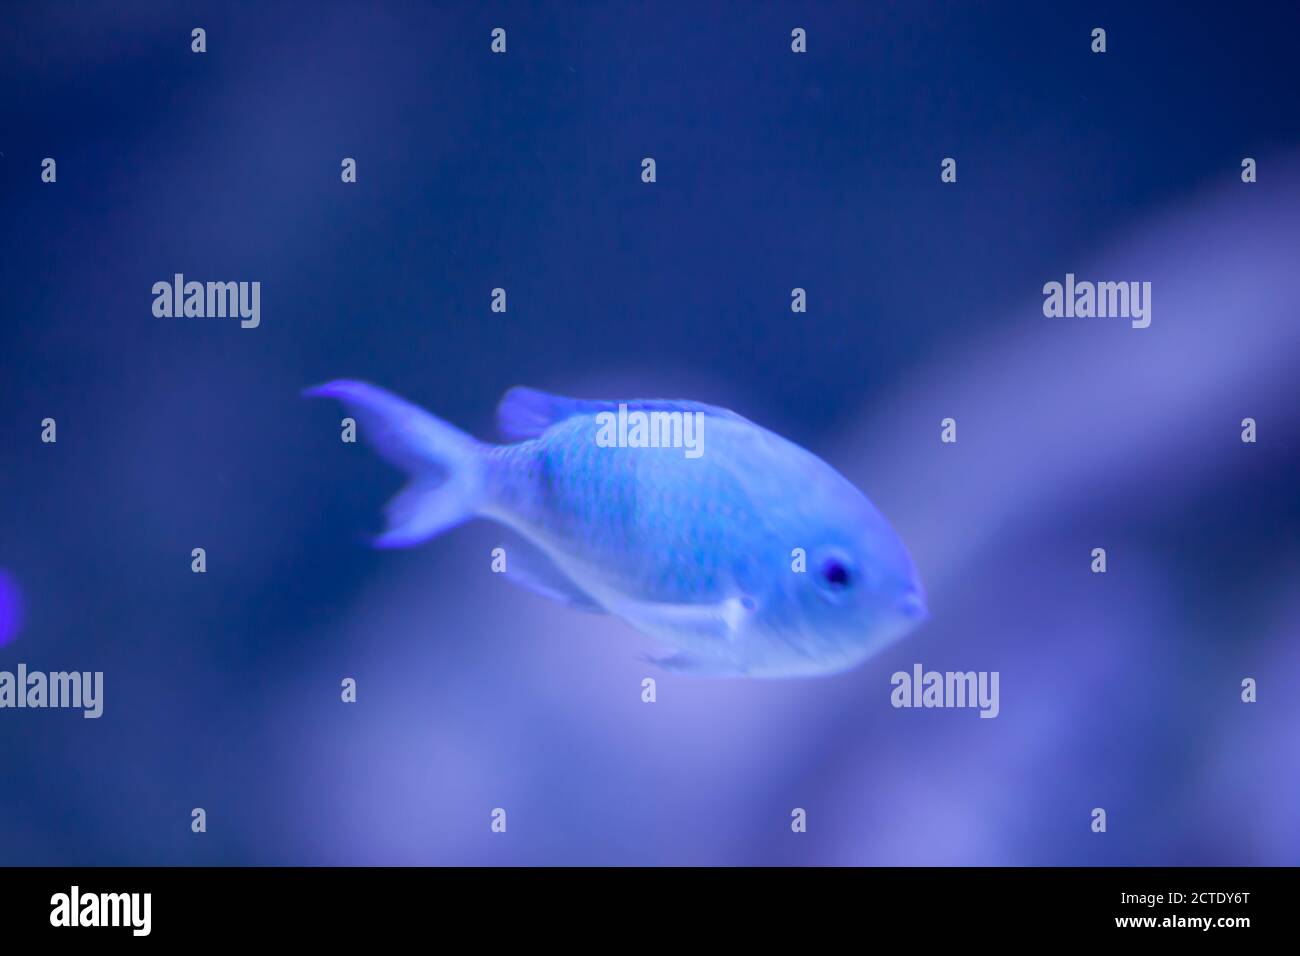 Underwater Cinematic - Close-up of a Blue Chromis / Chromis cyanea damselfish swimming in an aquarium. Bokeh & defocussed background Stock Photo